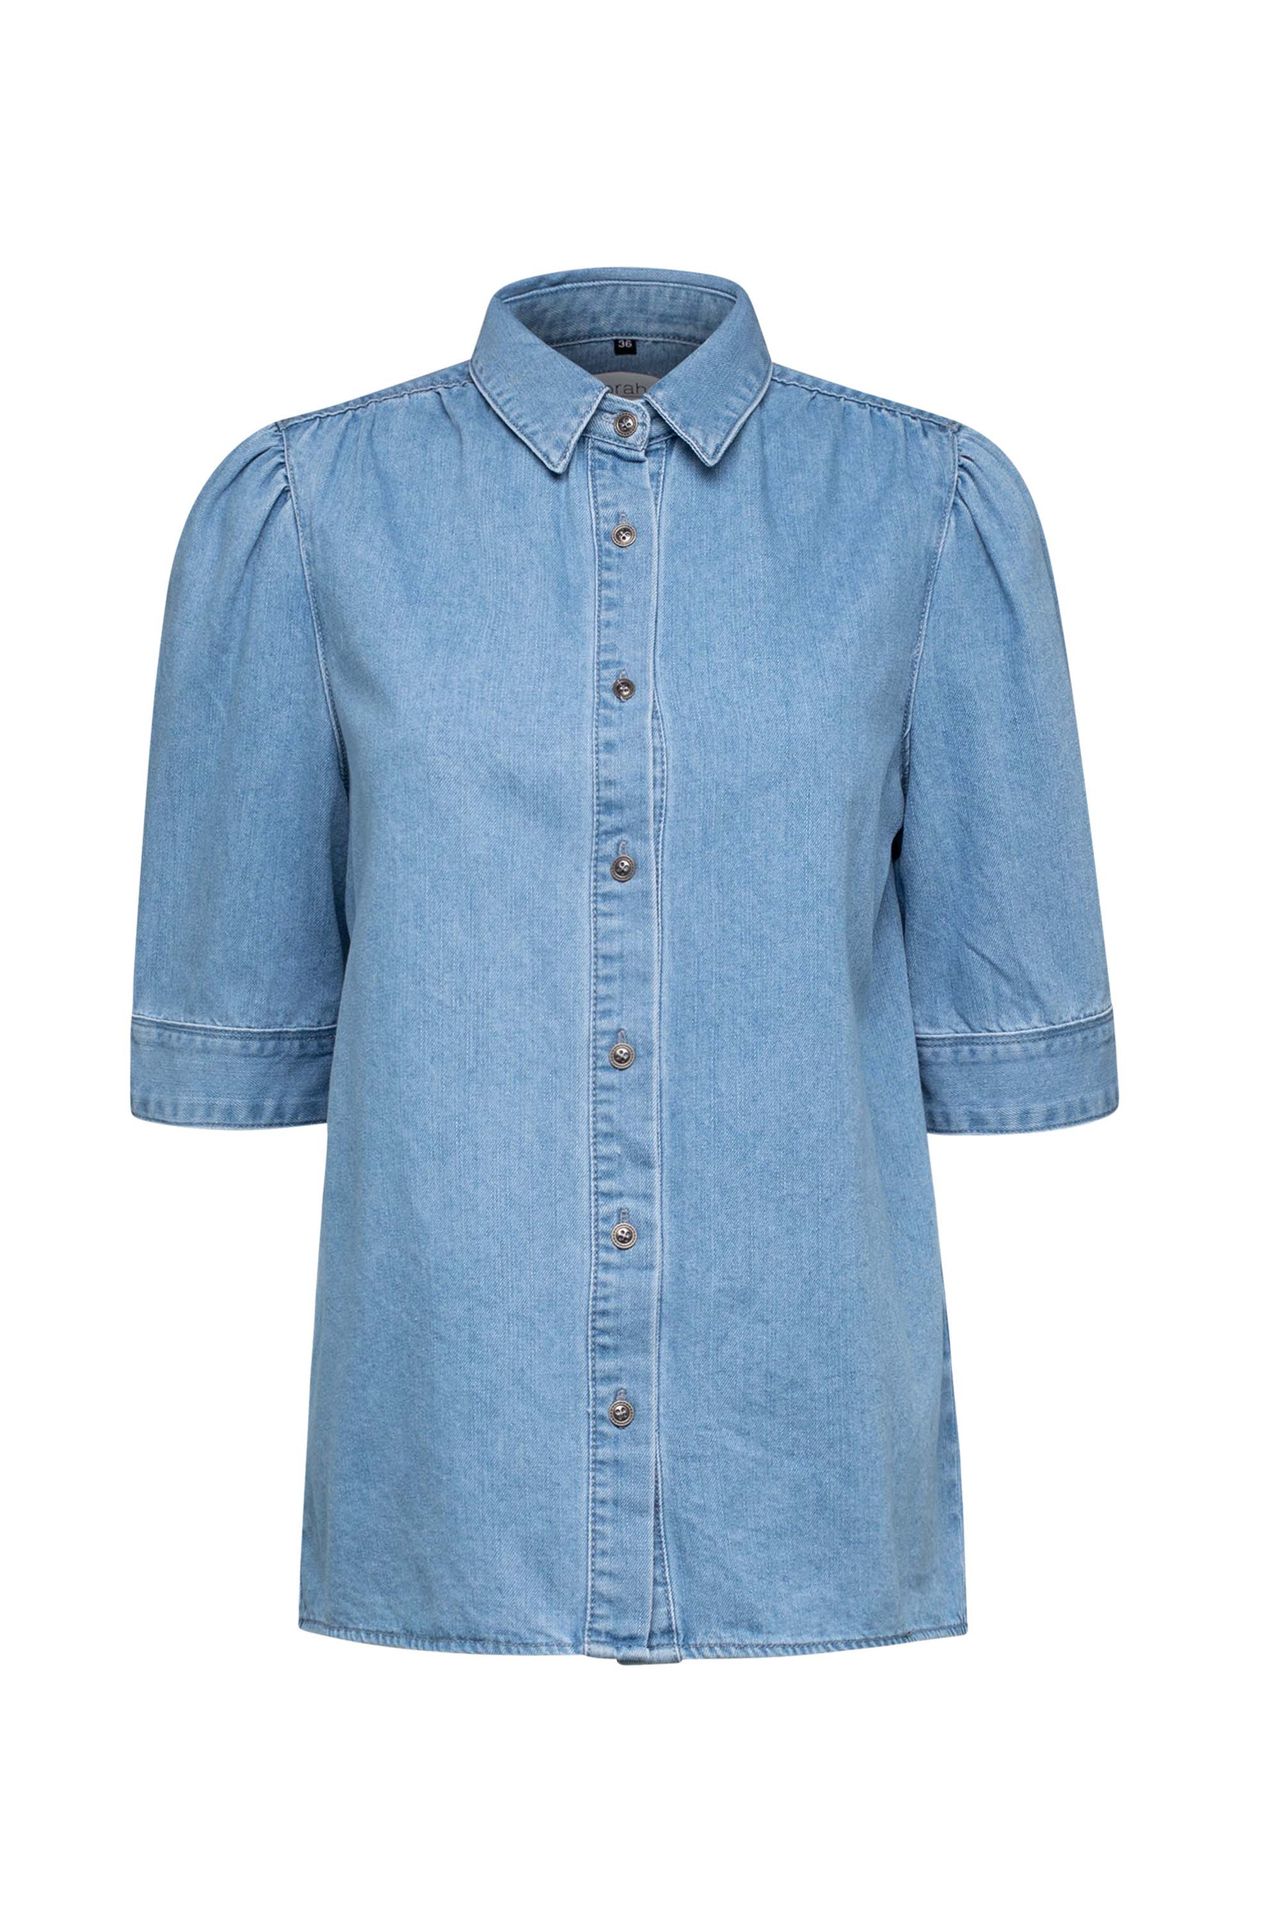  Denim blouse blauw blue 212390-400-44